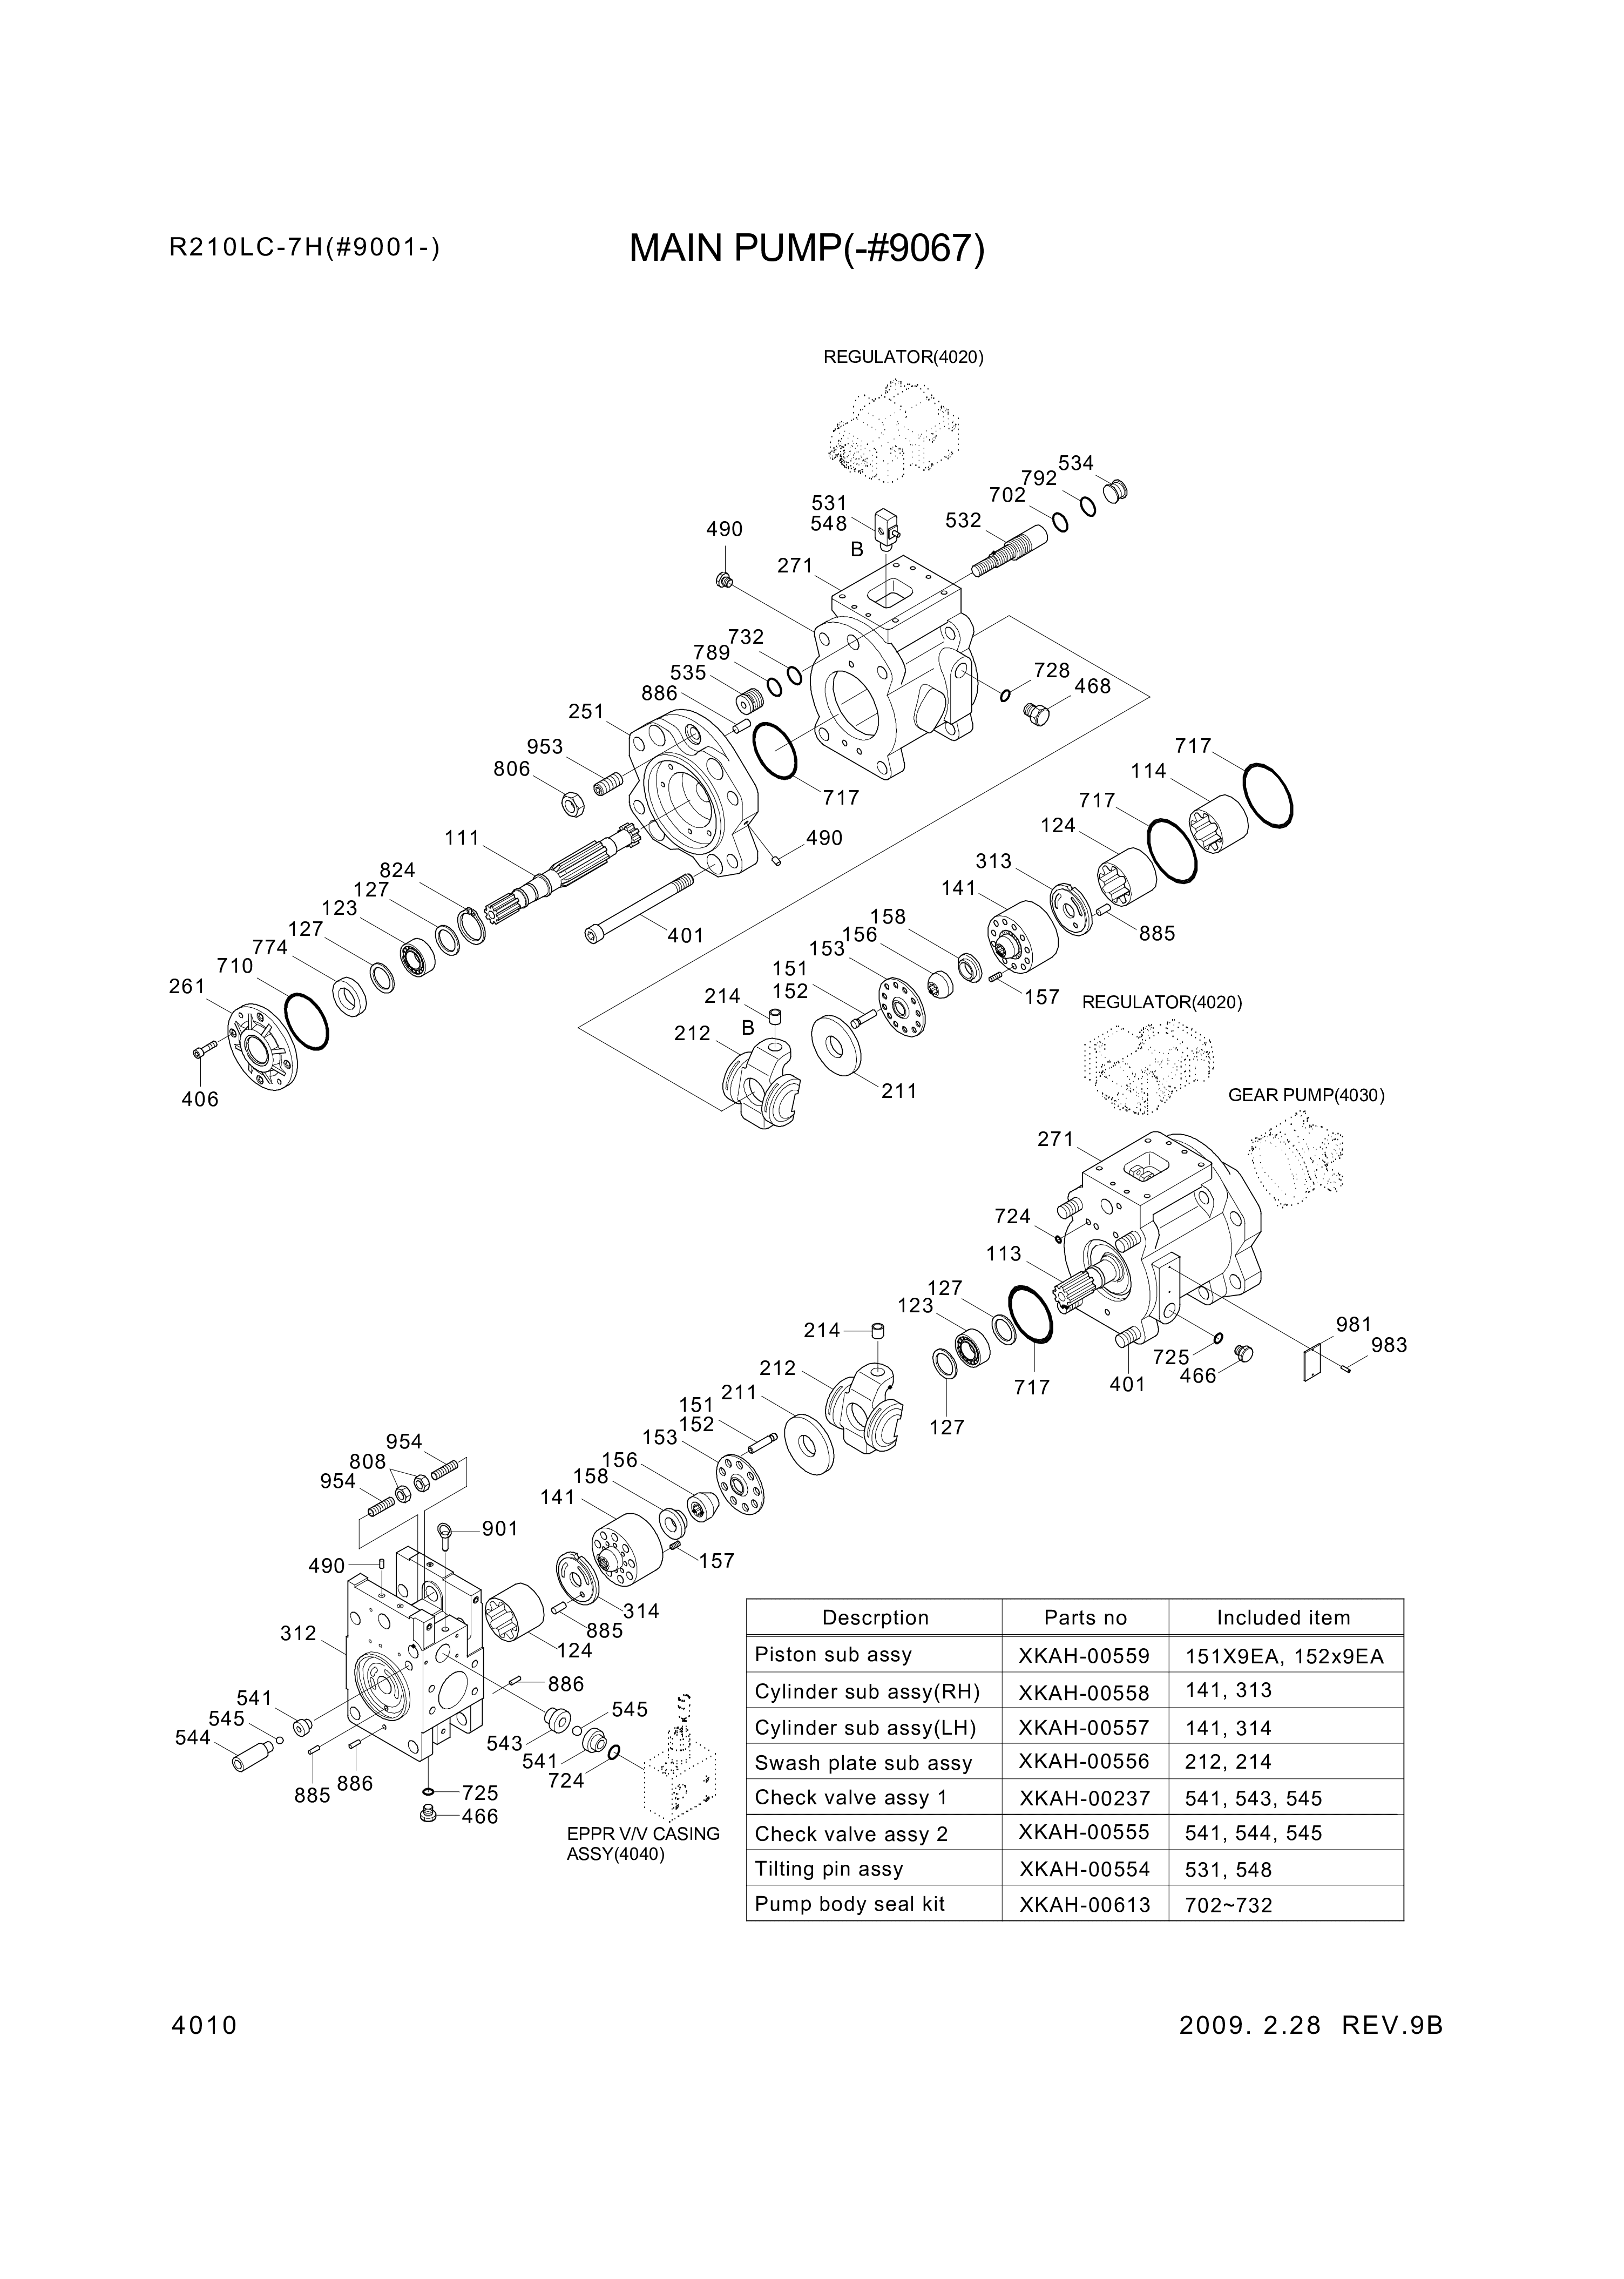 drawing for Hyundai Construction Equipment XKAH-00237 - VALVE ASSY-CHECK 1 (figure 3)